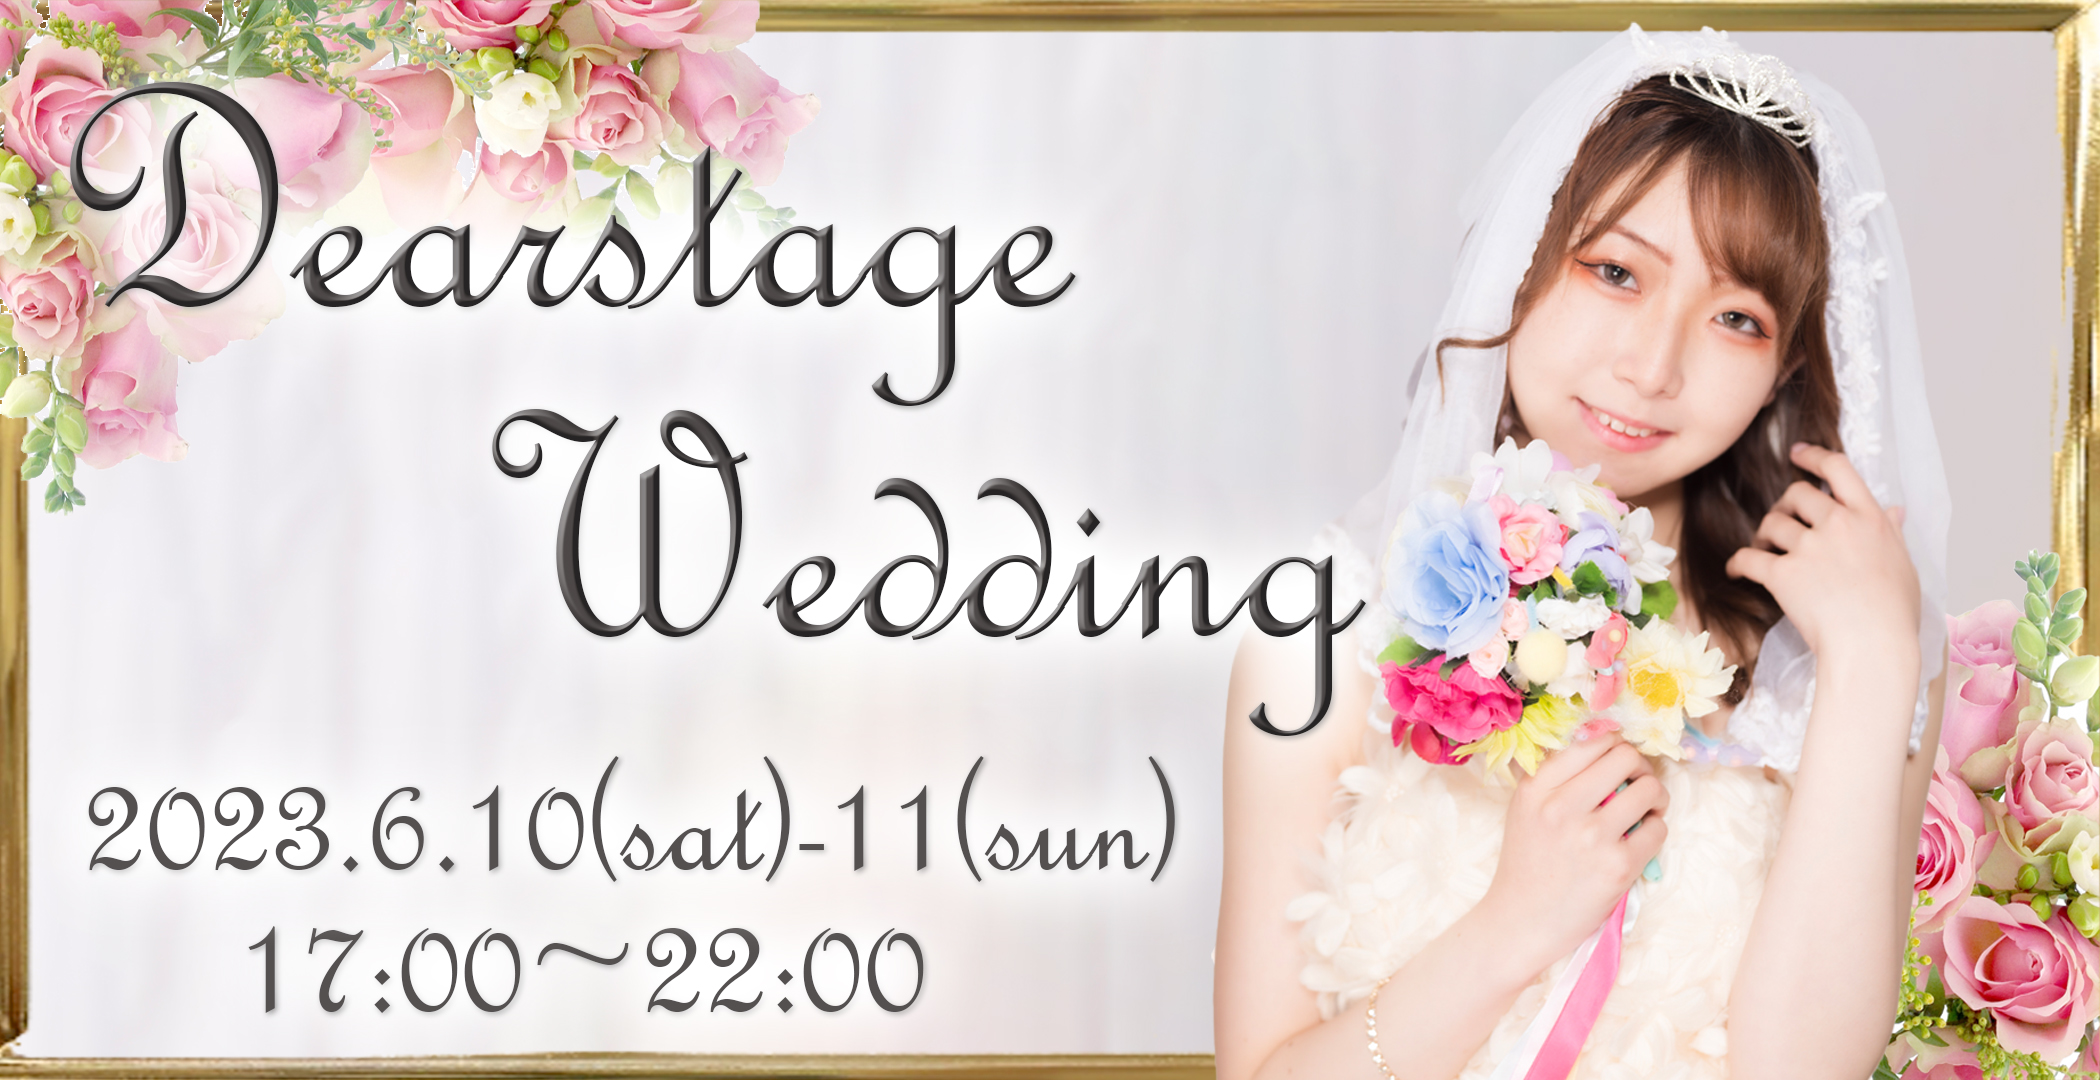 Dearstage Wedding